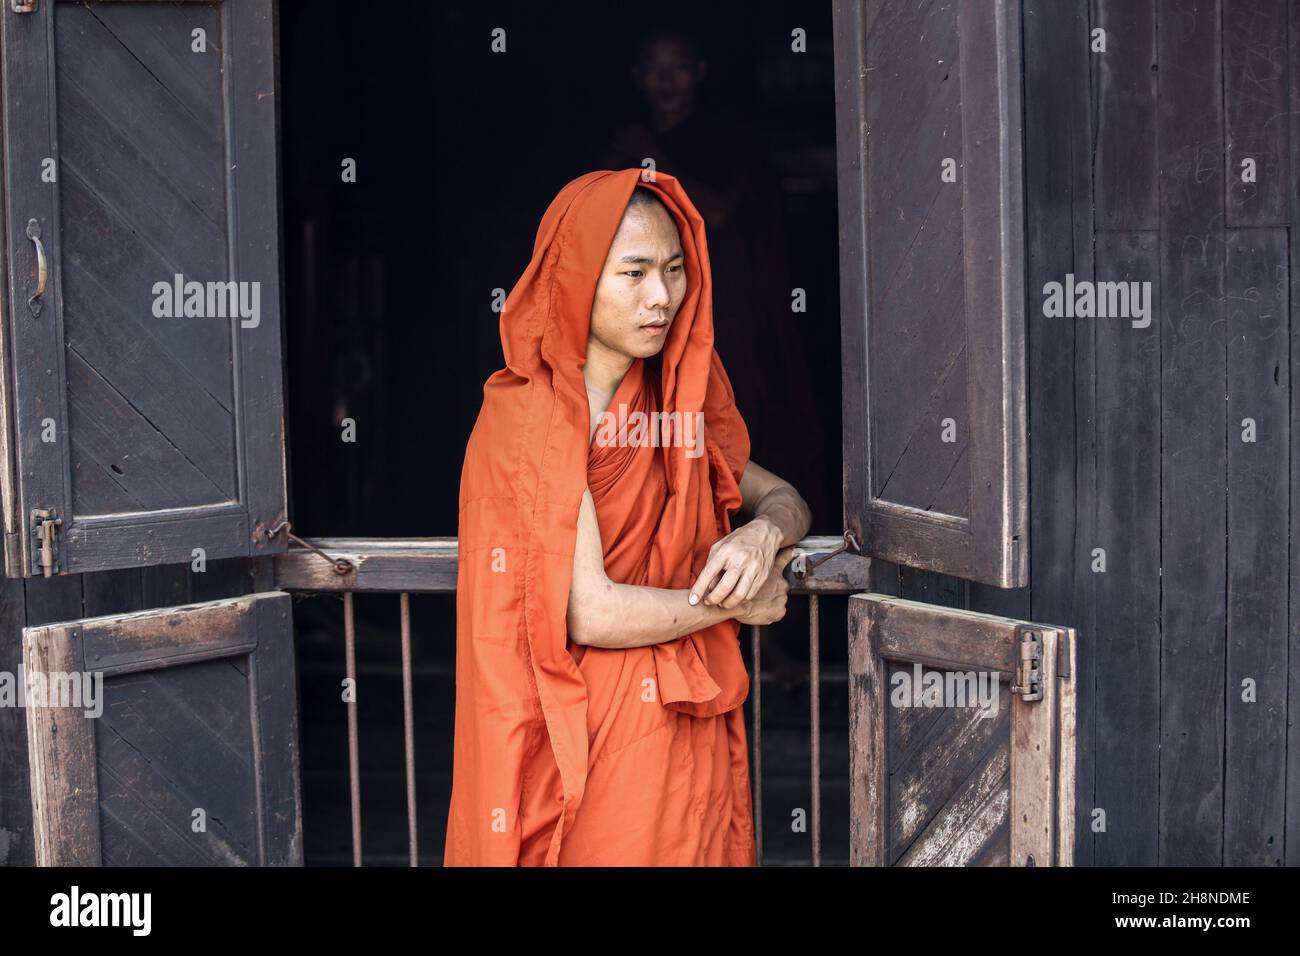 Buddhist monk in orange Kasaya robe, Kesa, Bagaya teak monastery in Inwa, Mandalay region, Myanmar monks buddhism picture image photo Stock Photo